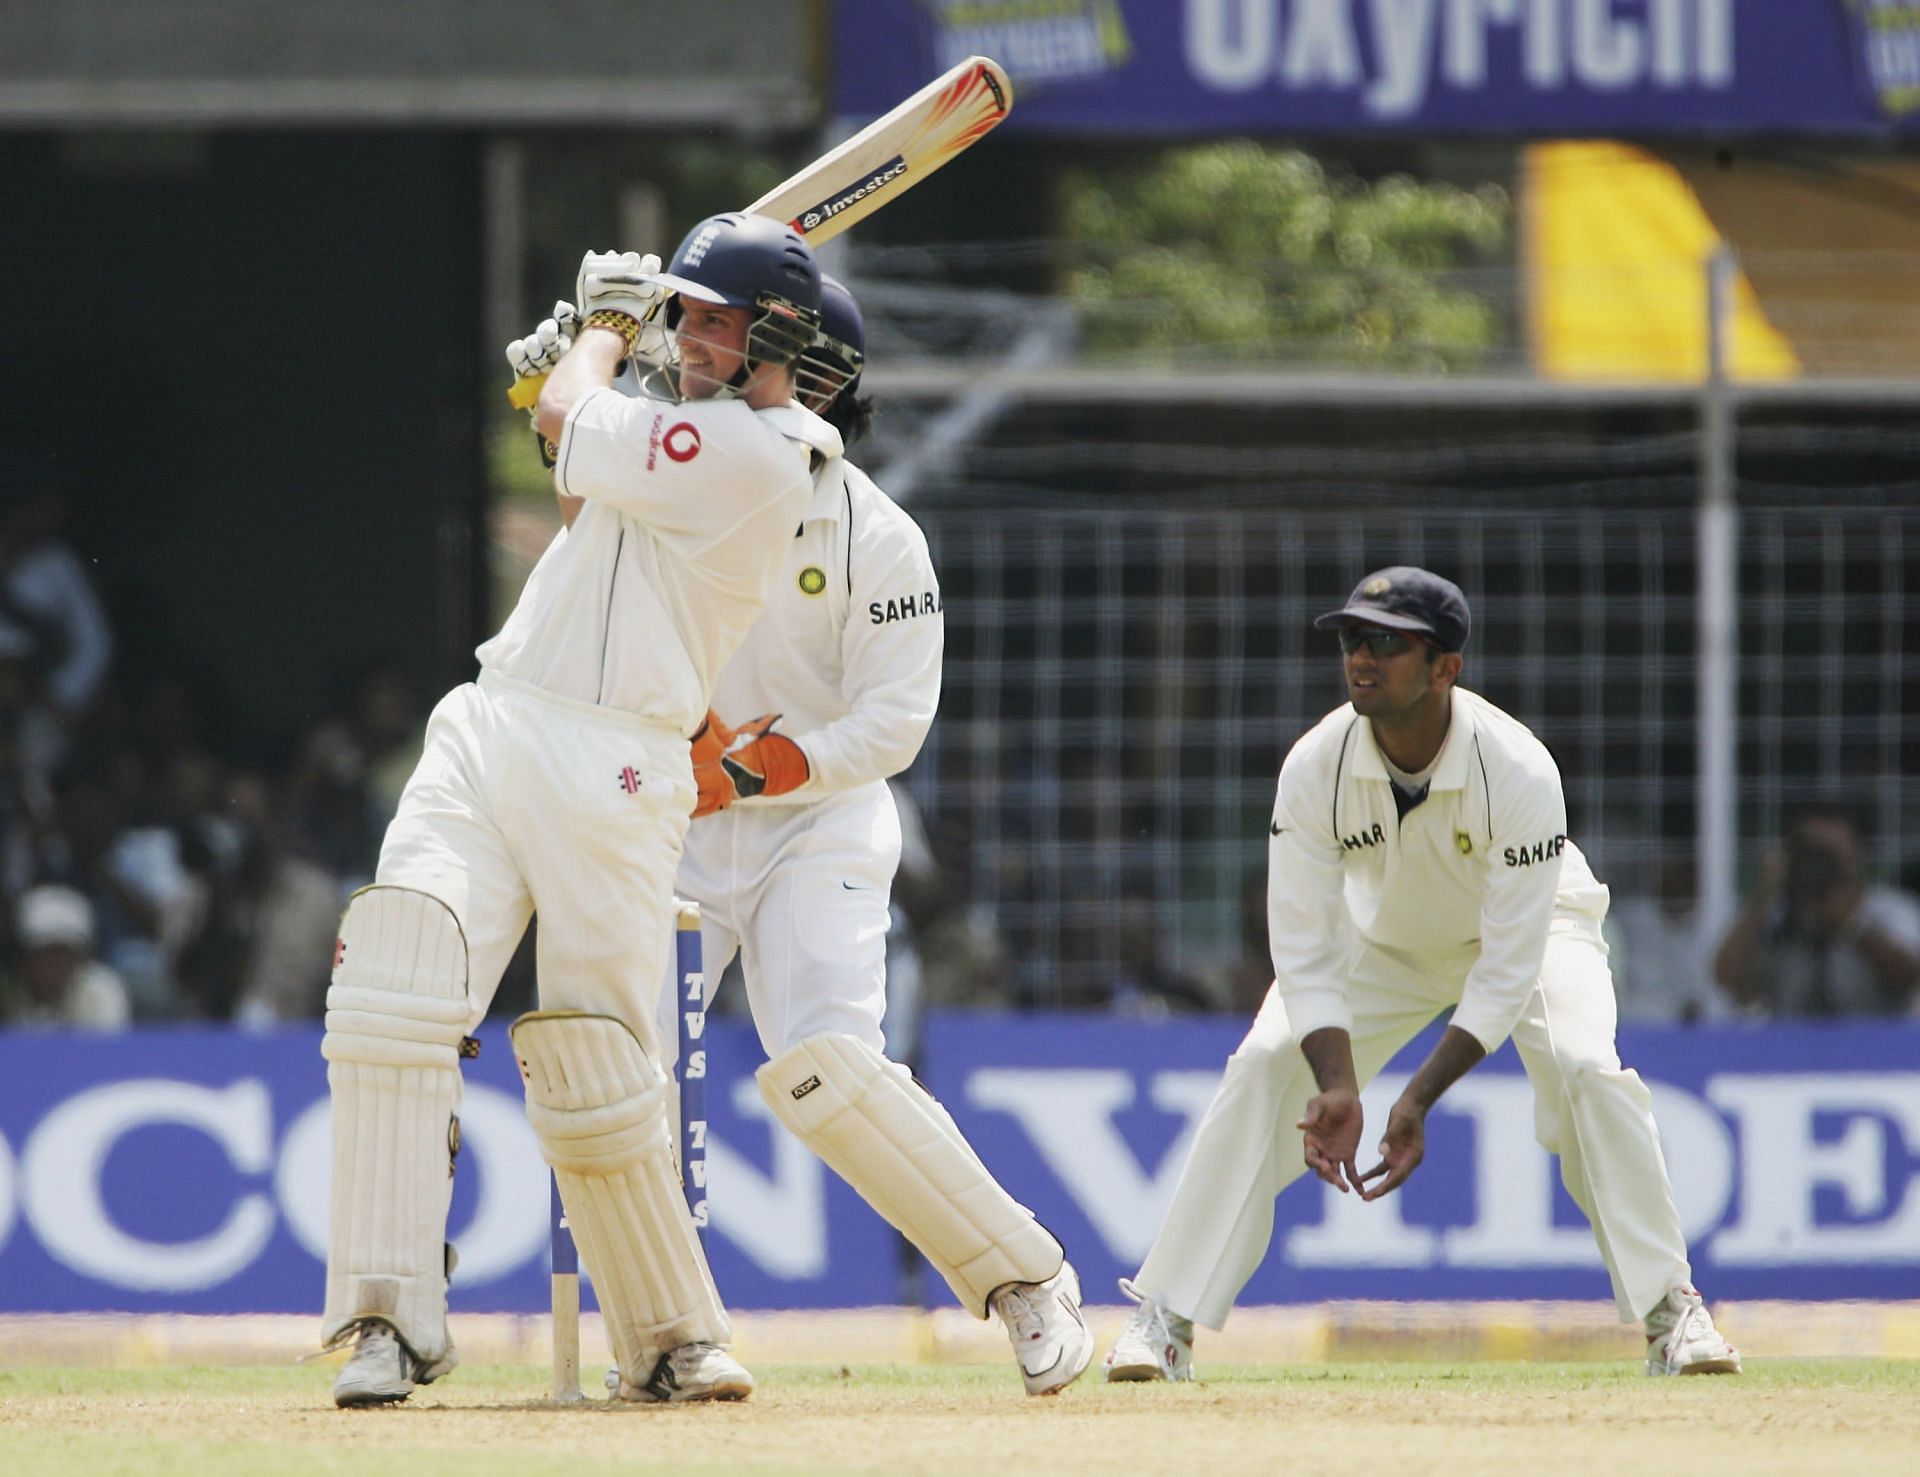 Andrew Strauss scored a brilliant 128 against India in Mumbai in 2006